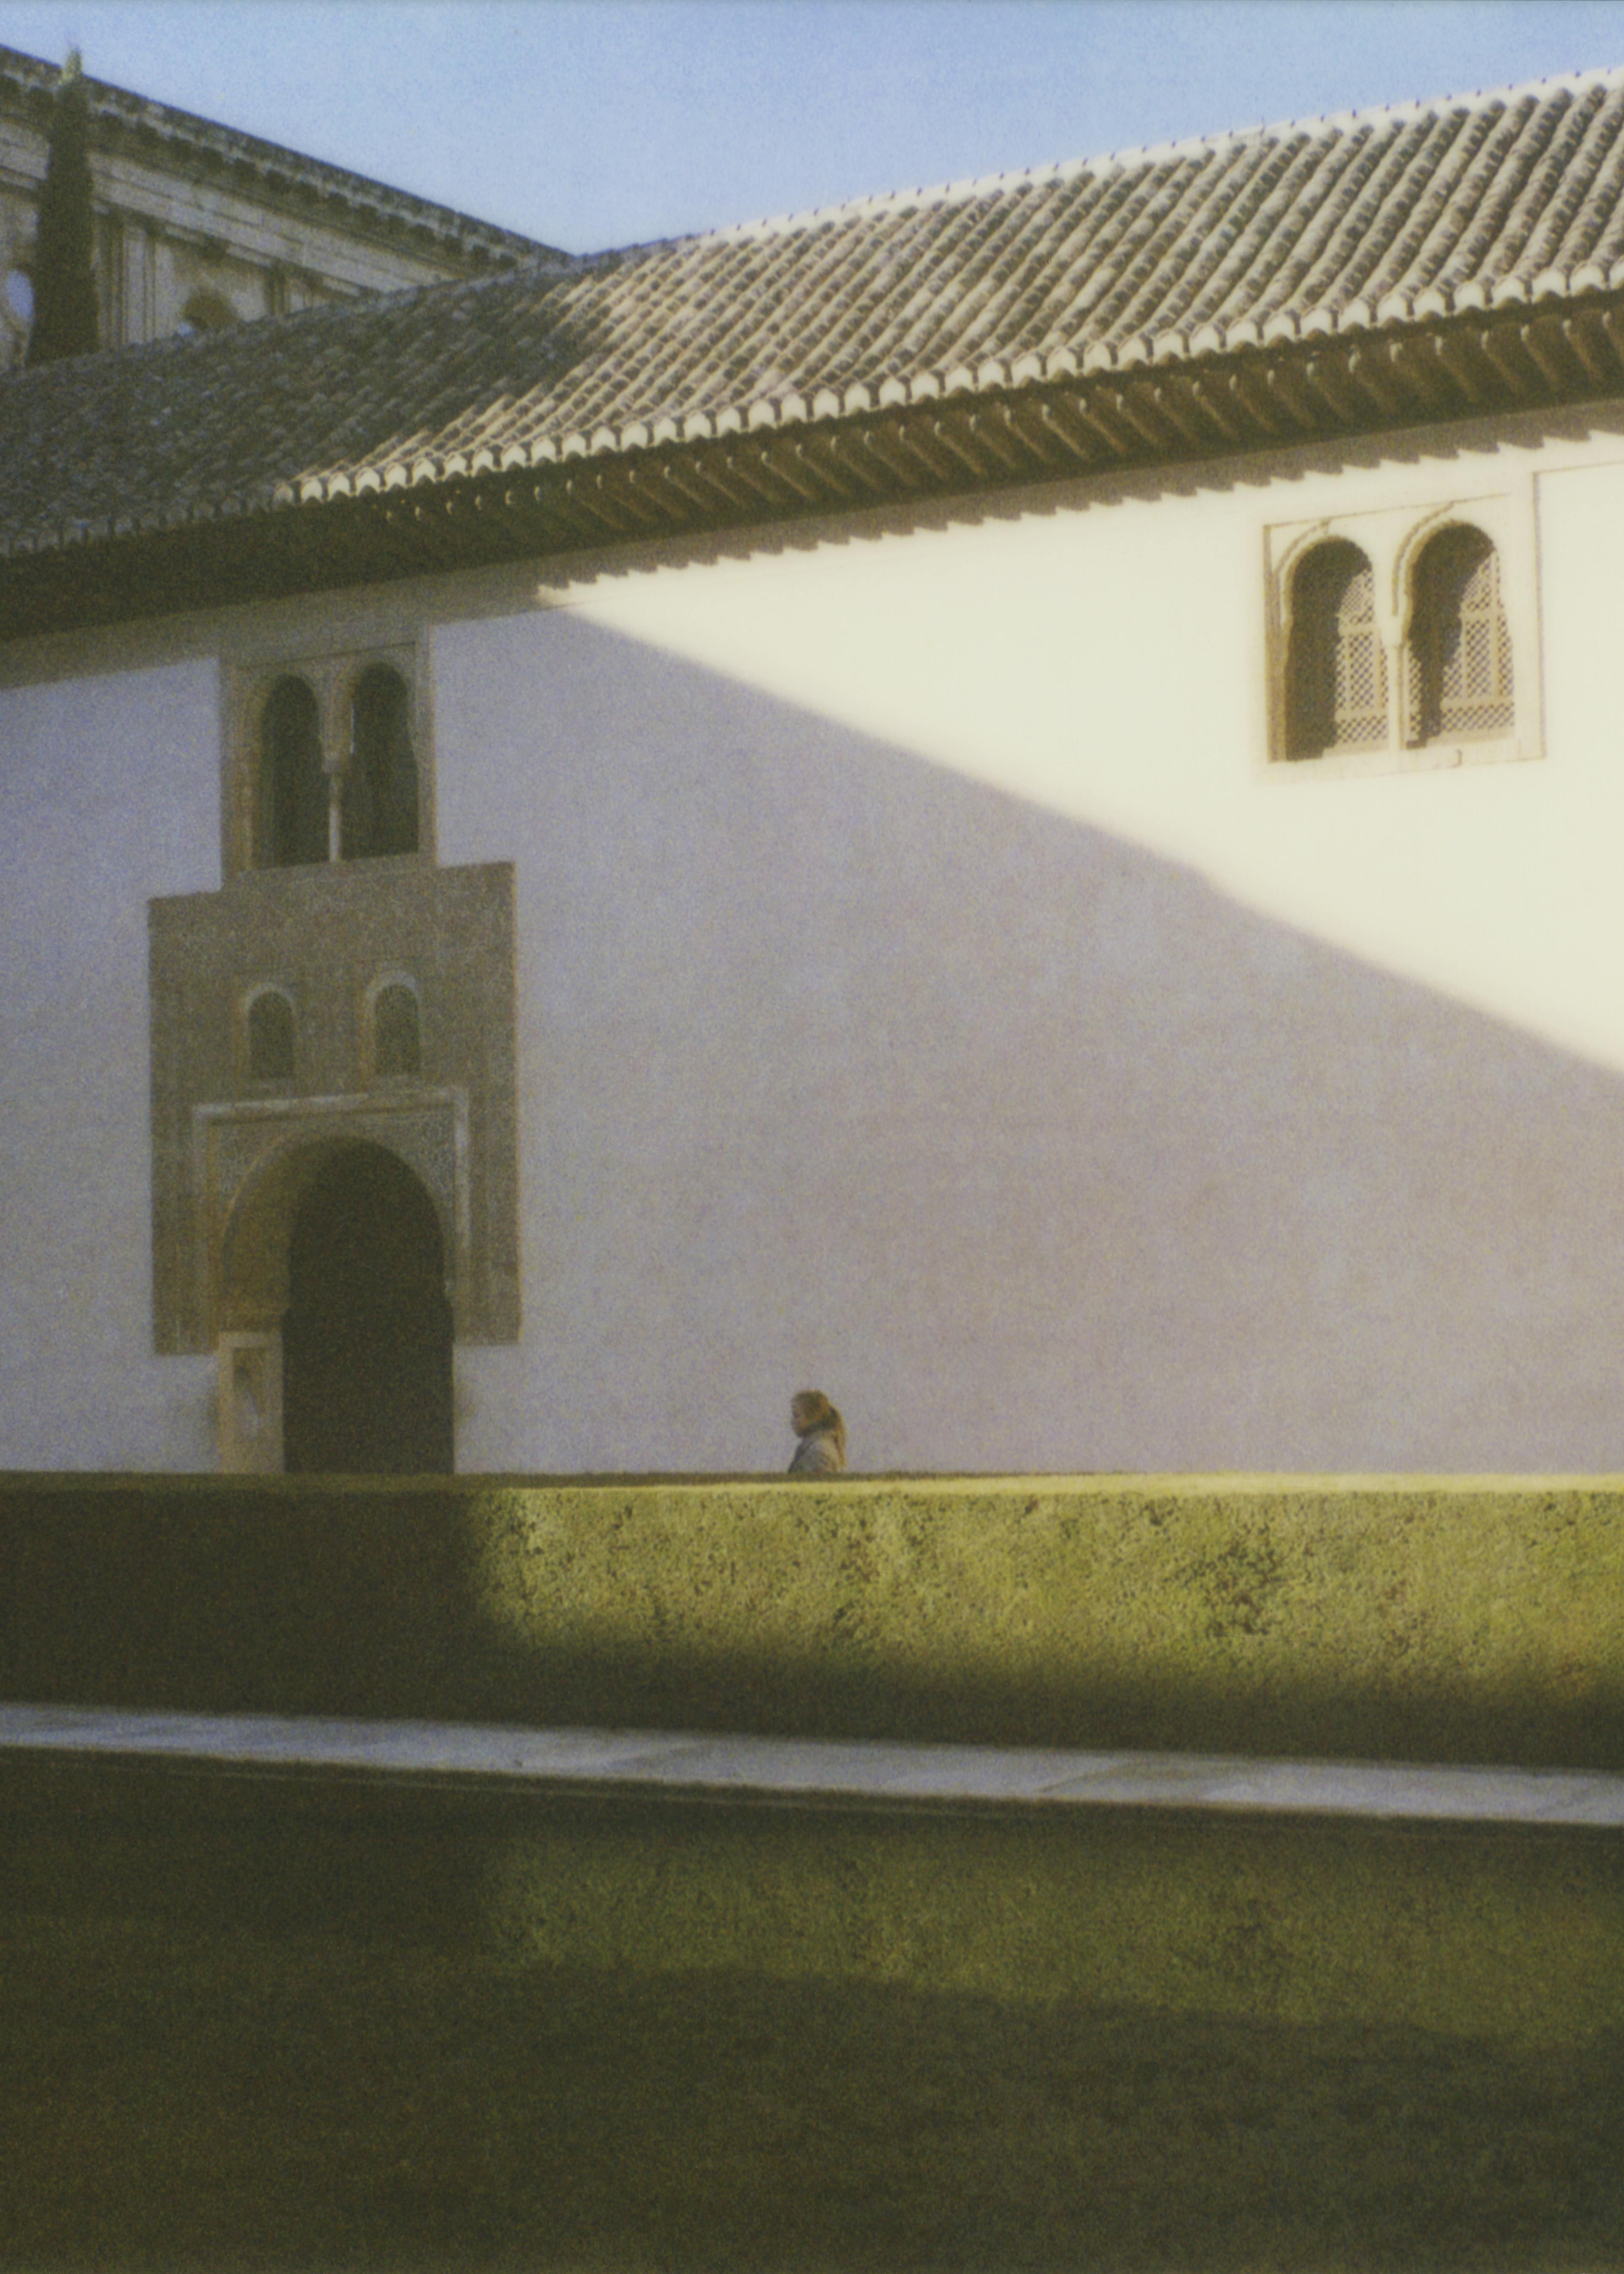 Granada, 2013 / From Promenades, Vol. IV